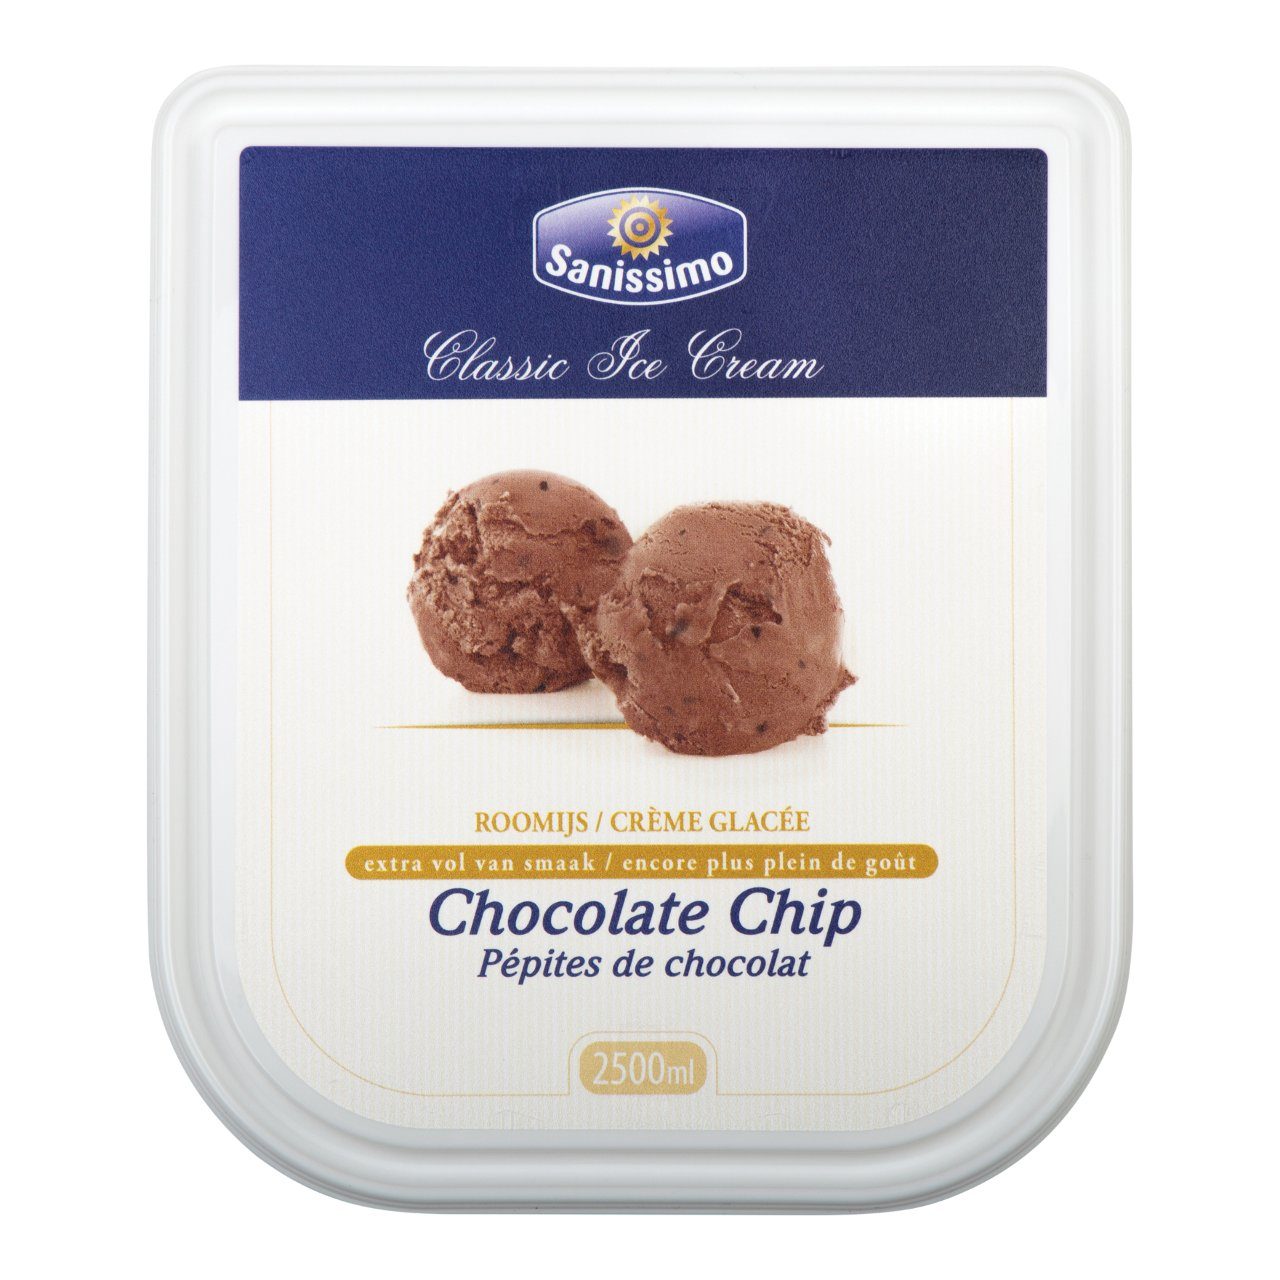 Chocolate chip